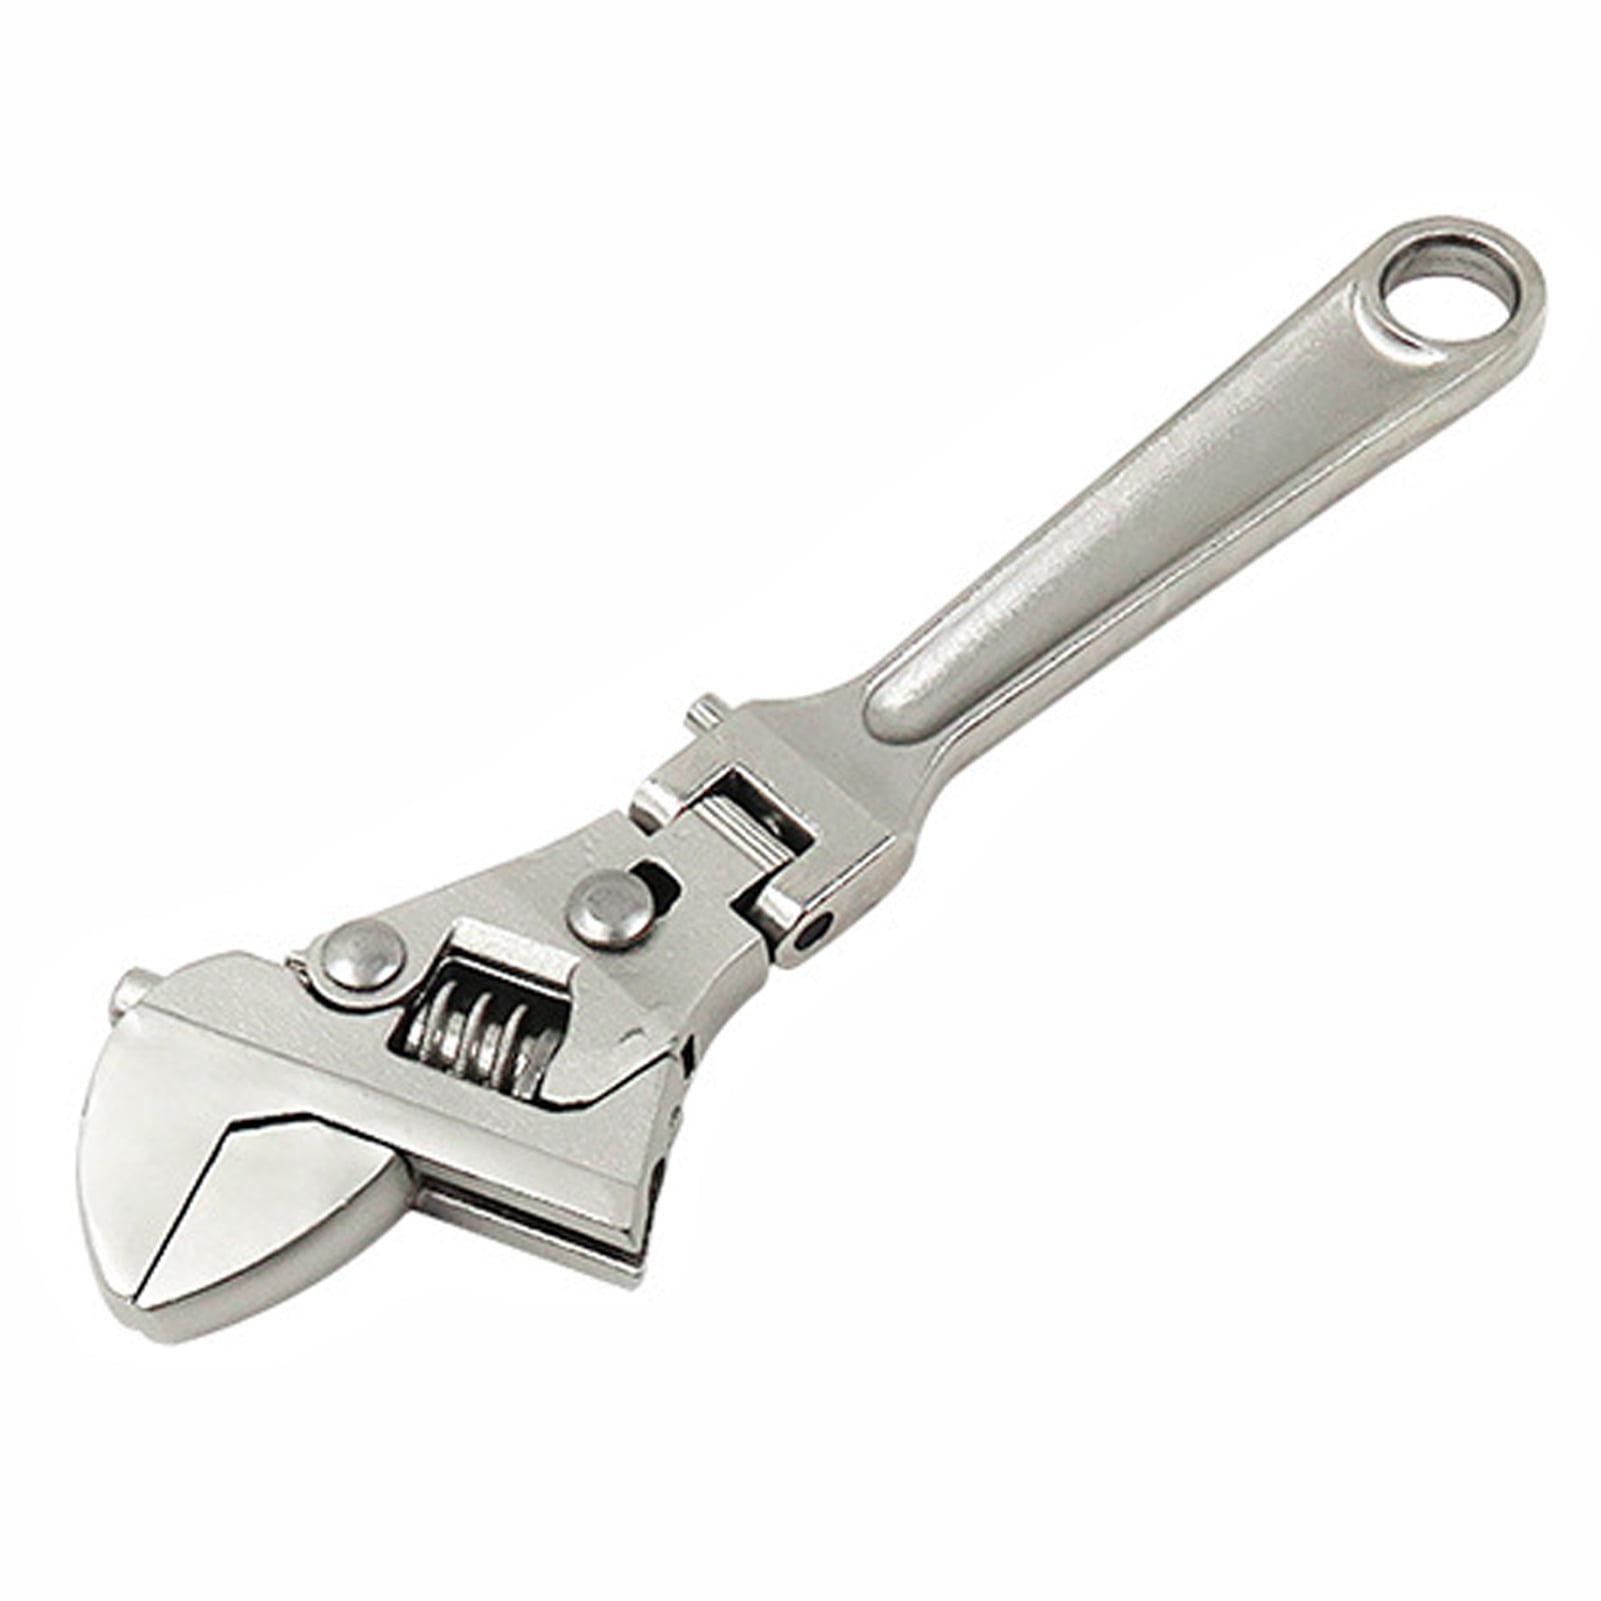 24mm Dual‑Purpose Adjustable Spanner Portable Adjustable Wrench Hand Repairing Hardware Tool 